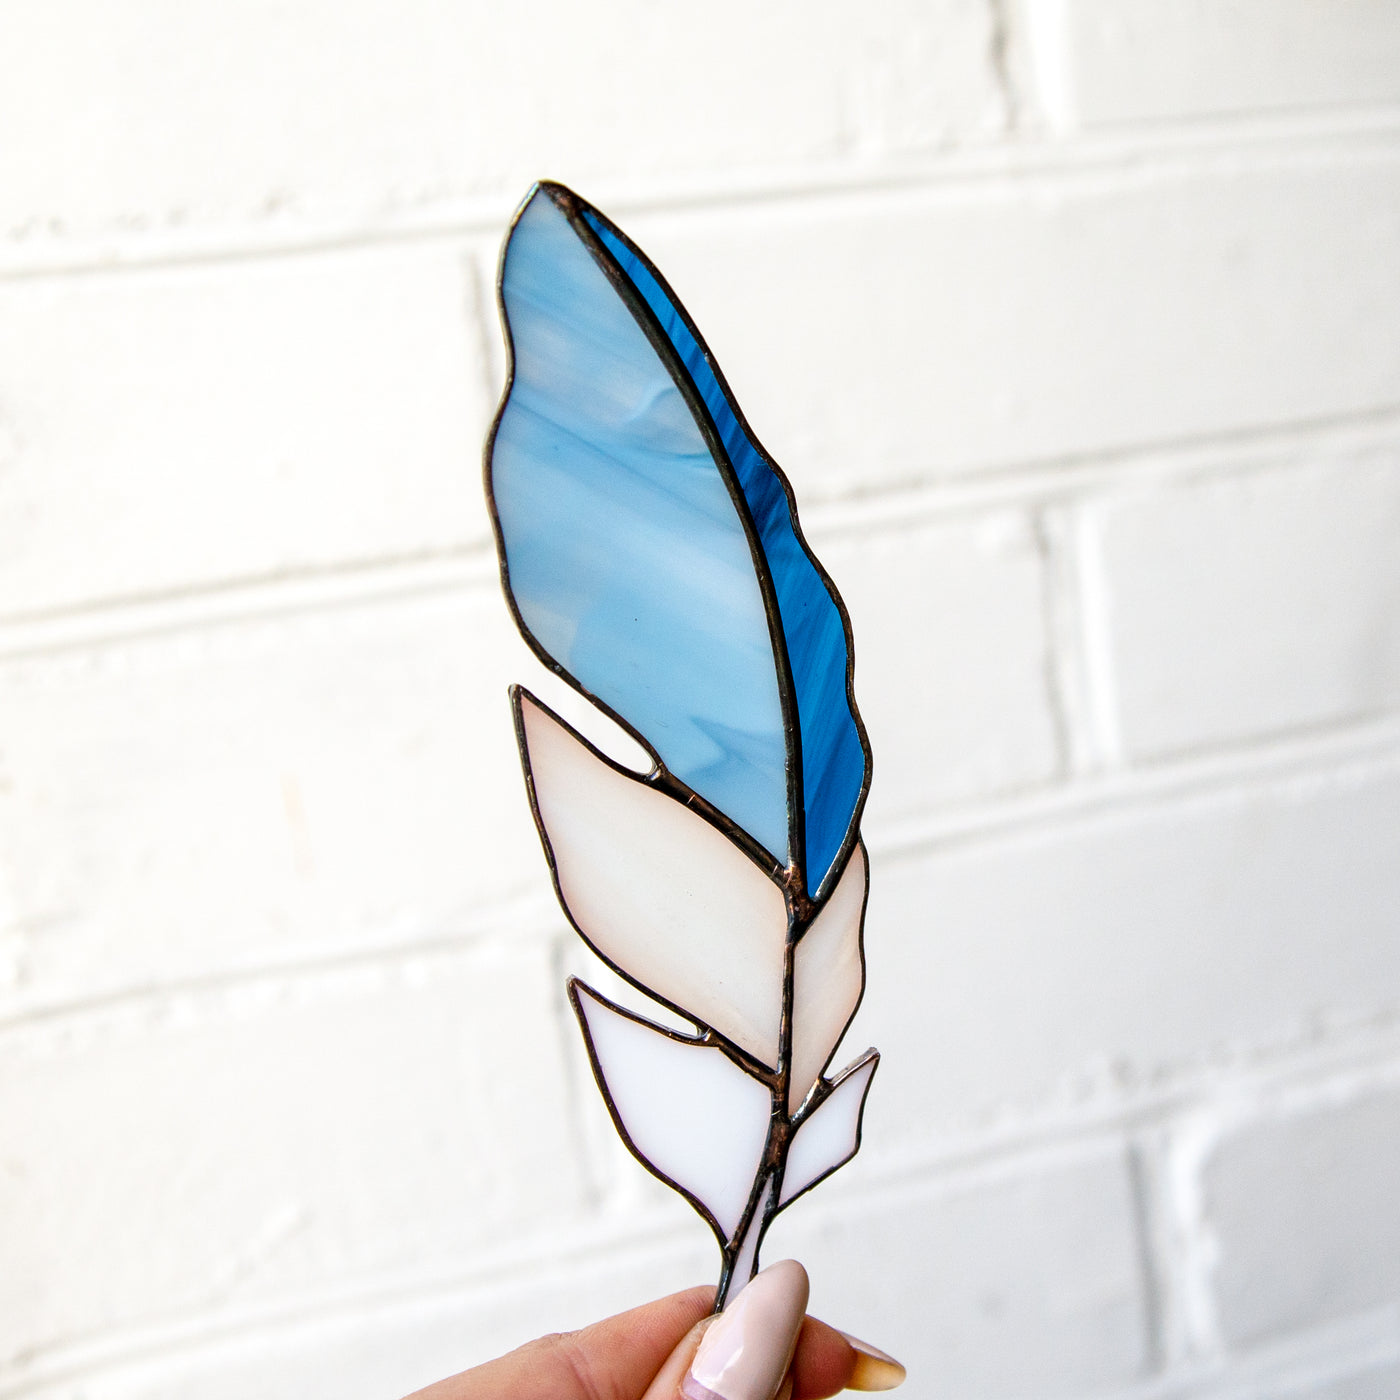 Sky-blue feather suncatcher for window 